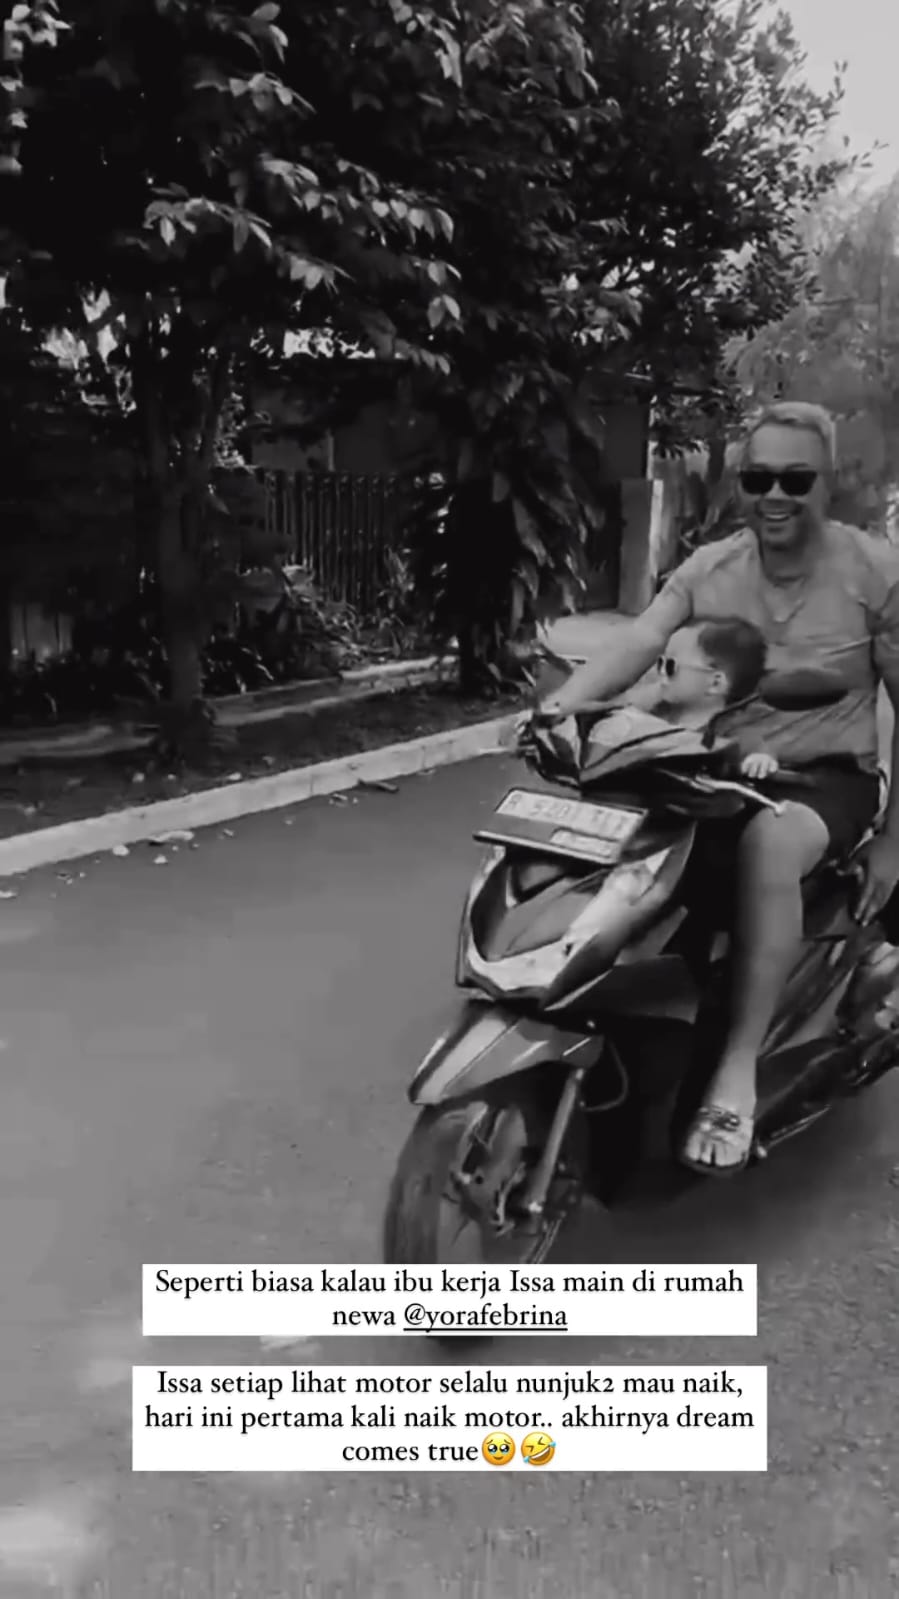 Bahagianya Nikita Willy saat keinginan Issa anaknya naik motor matic terkabul, sebut mimpi jadi nyata